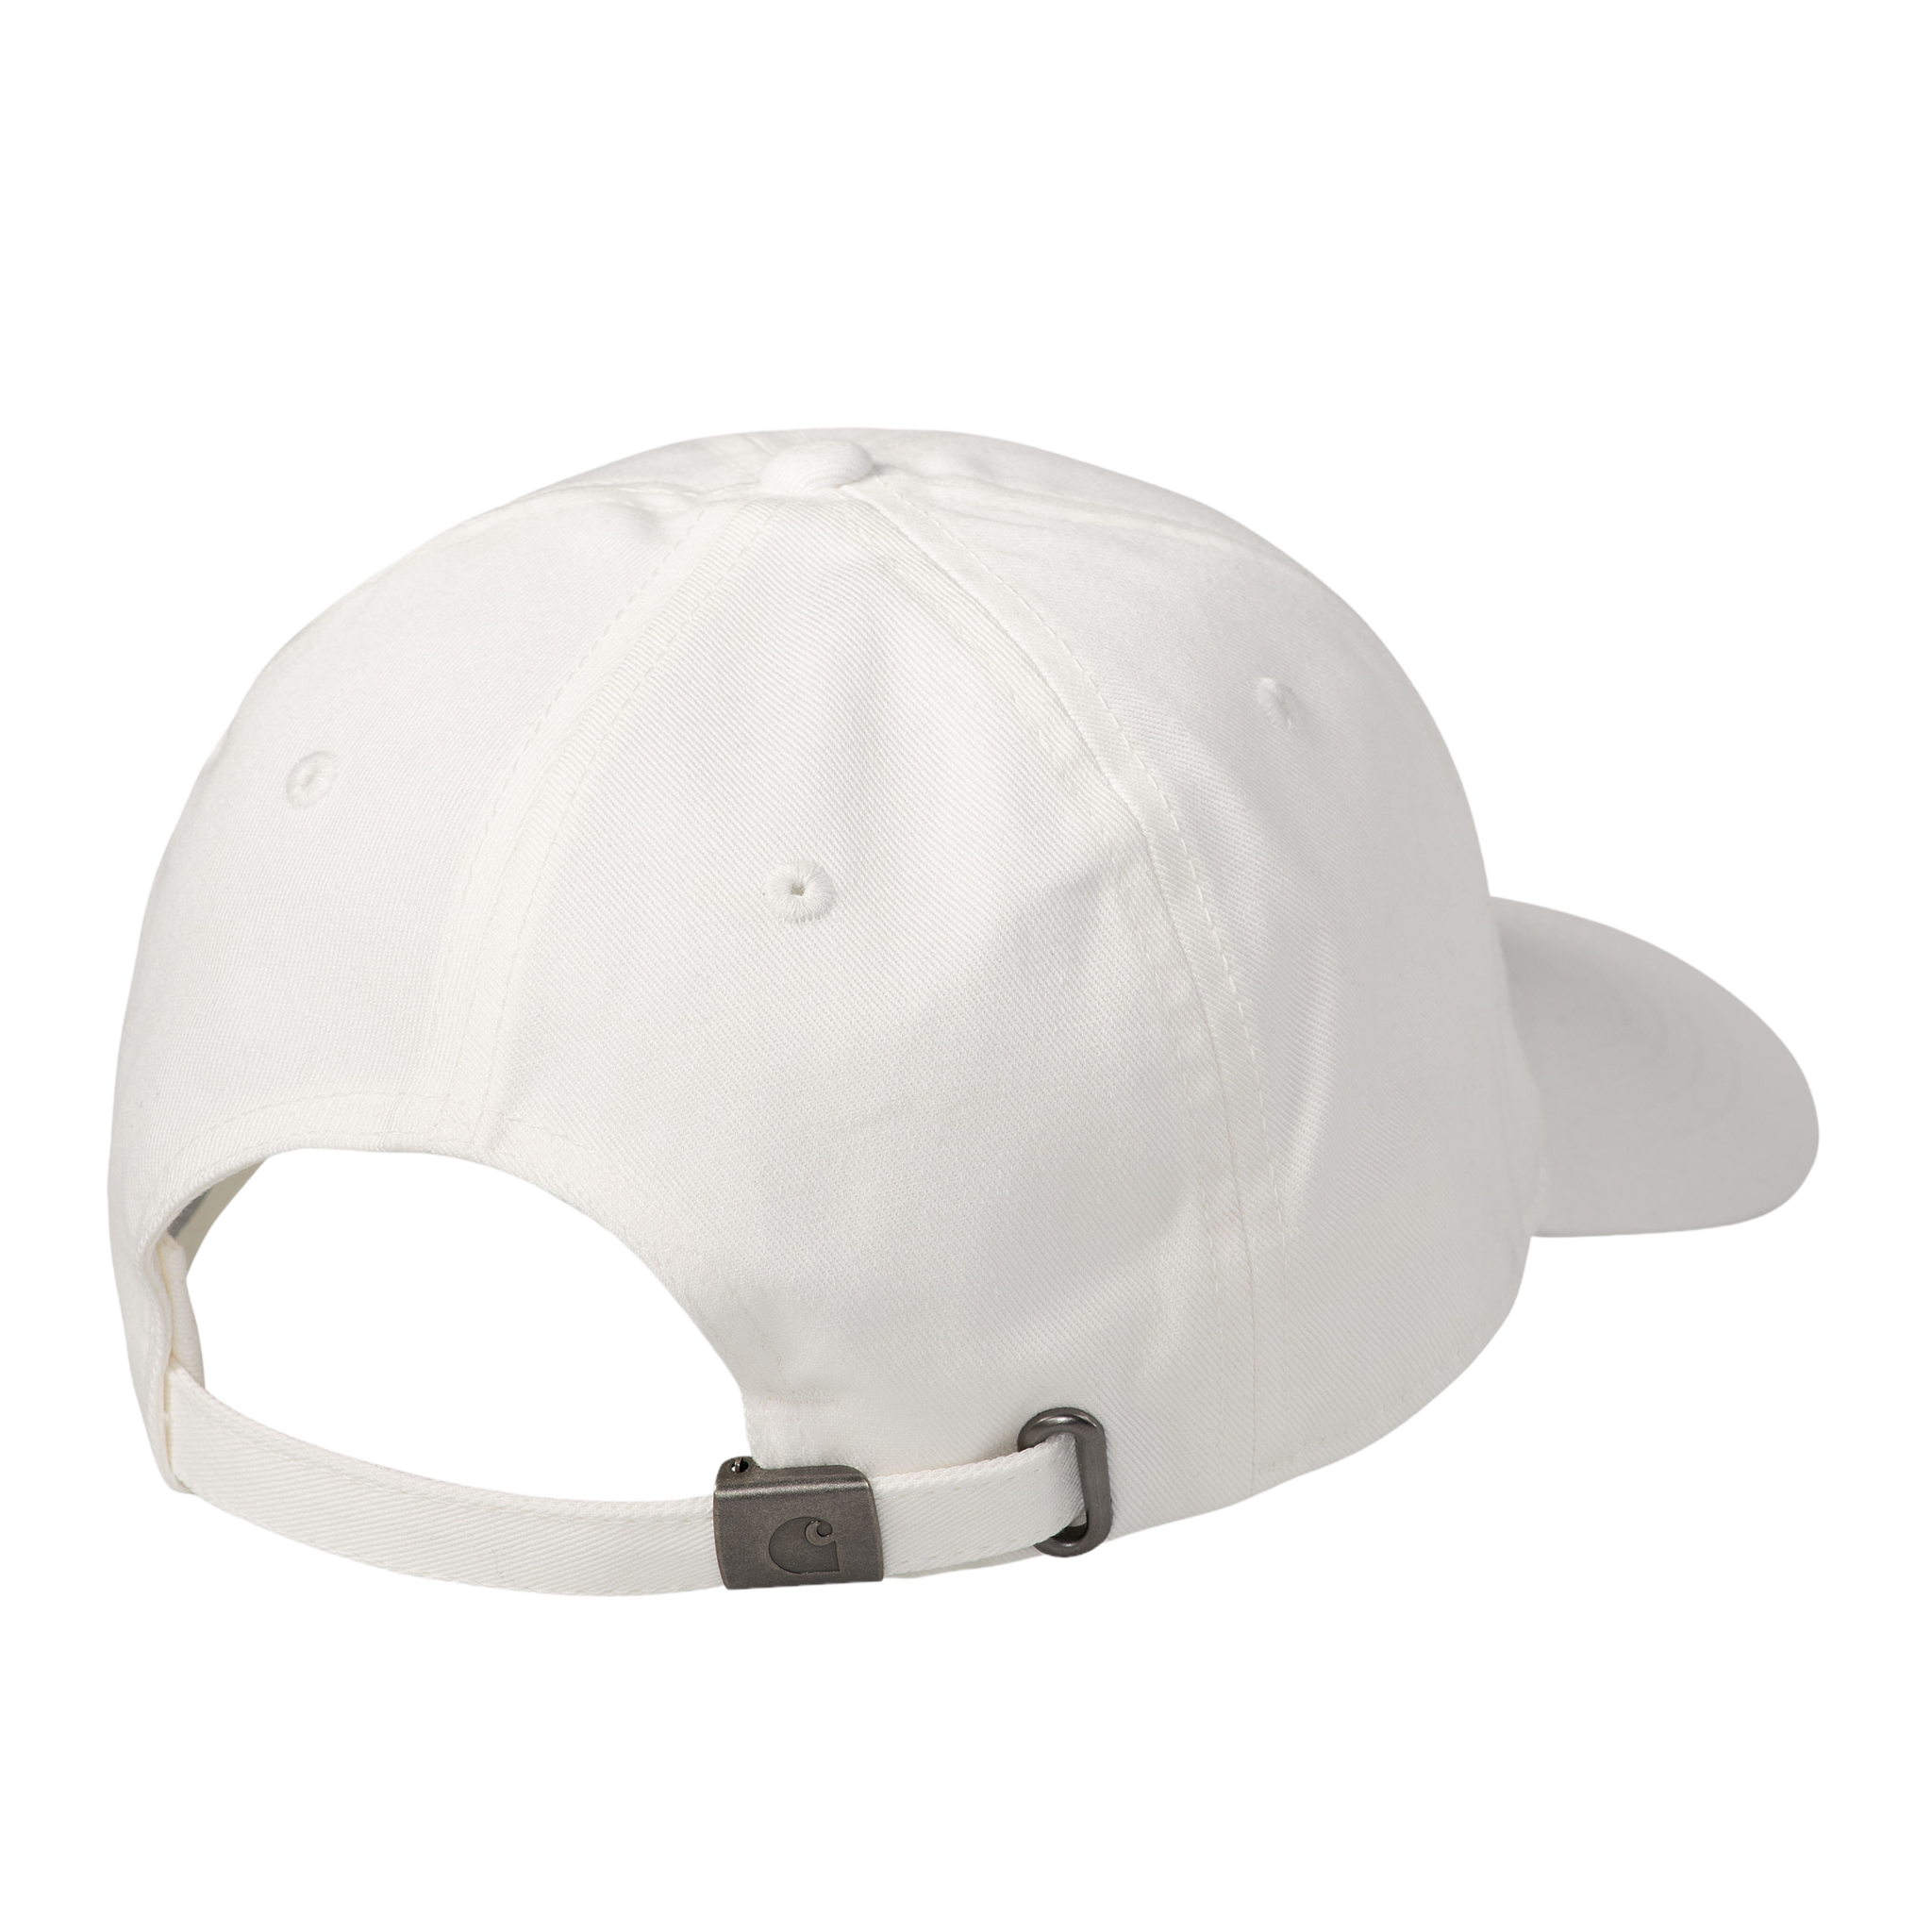 Carhartt Locker Cap - White